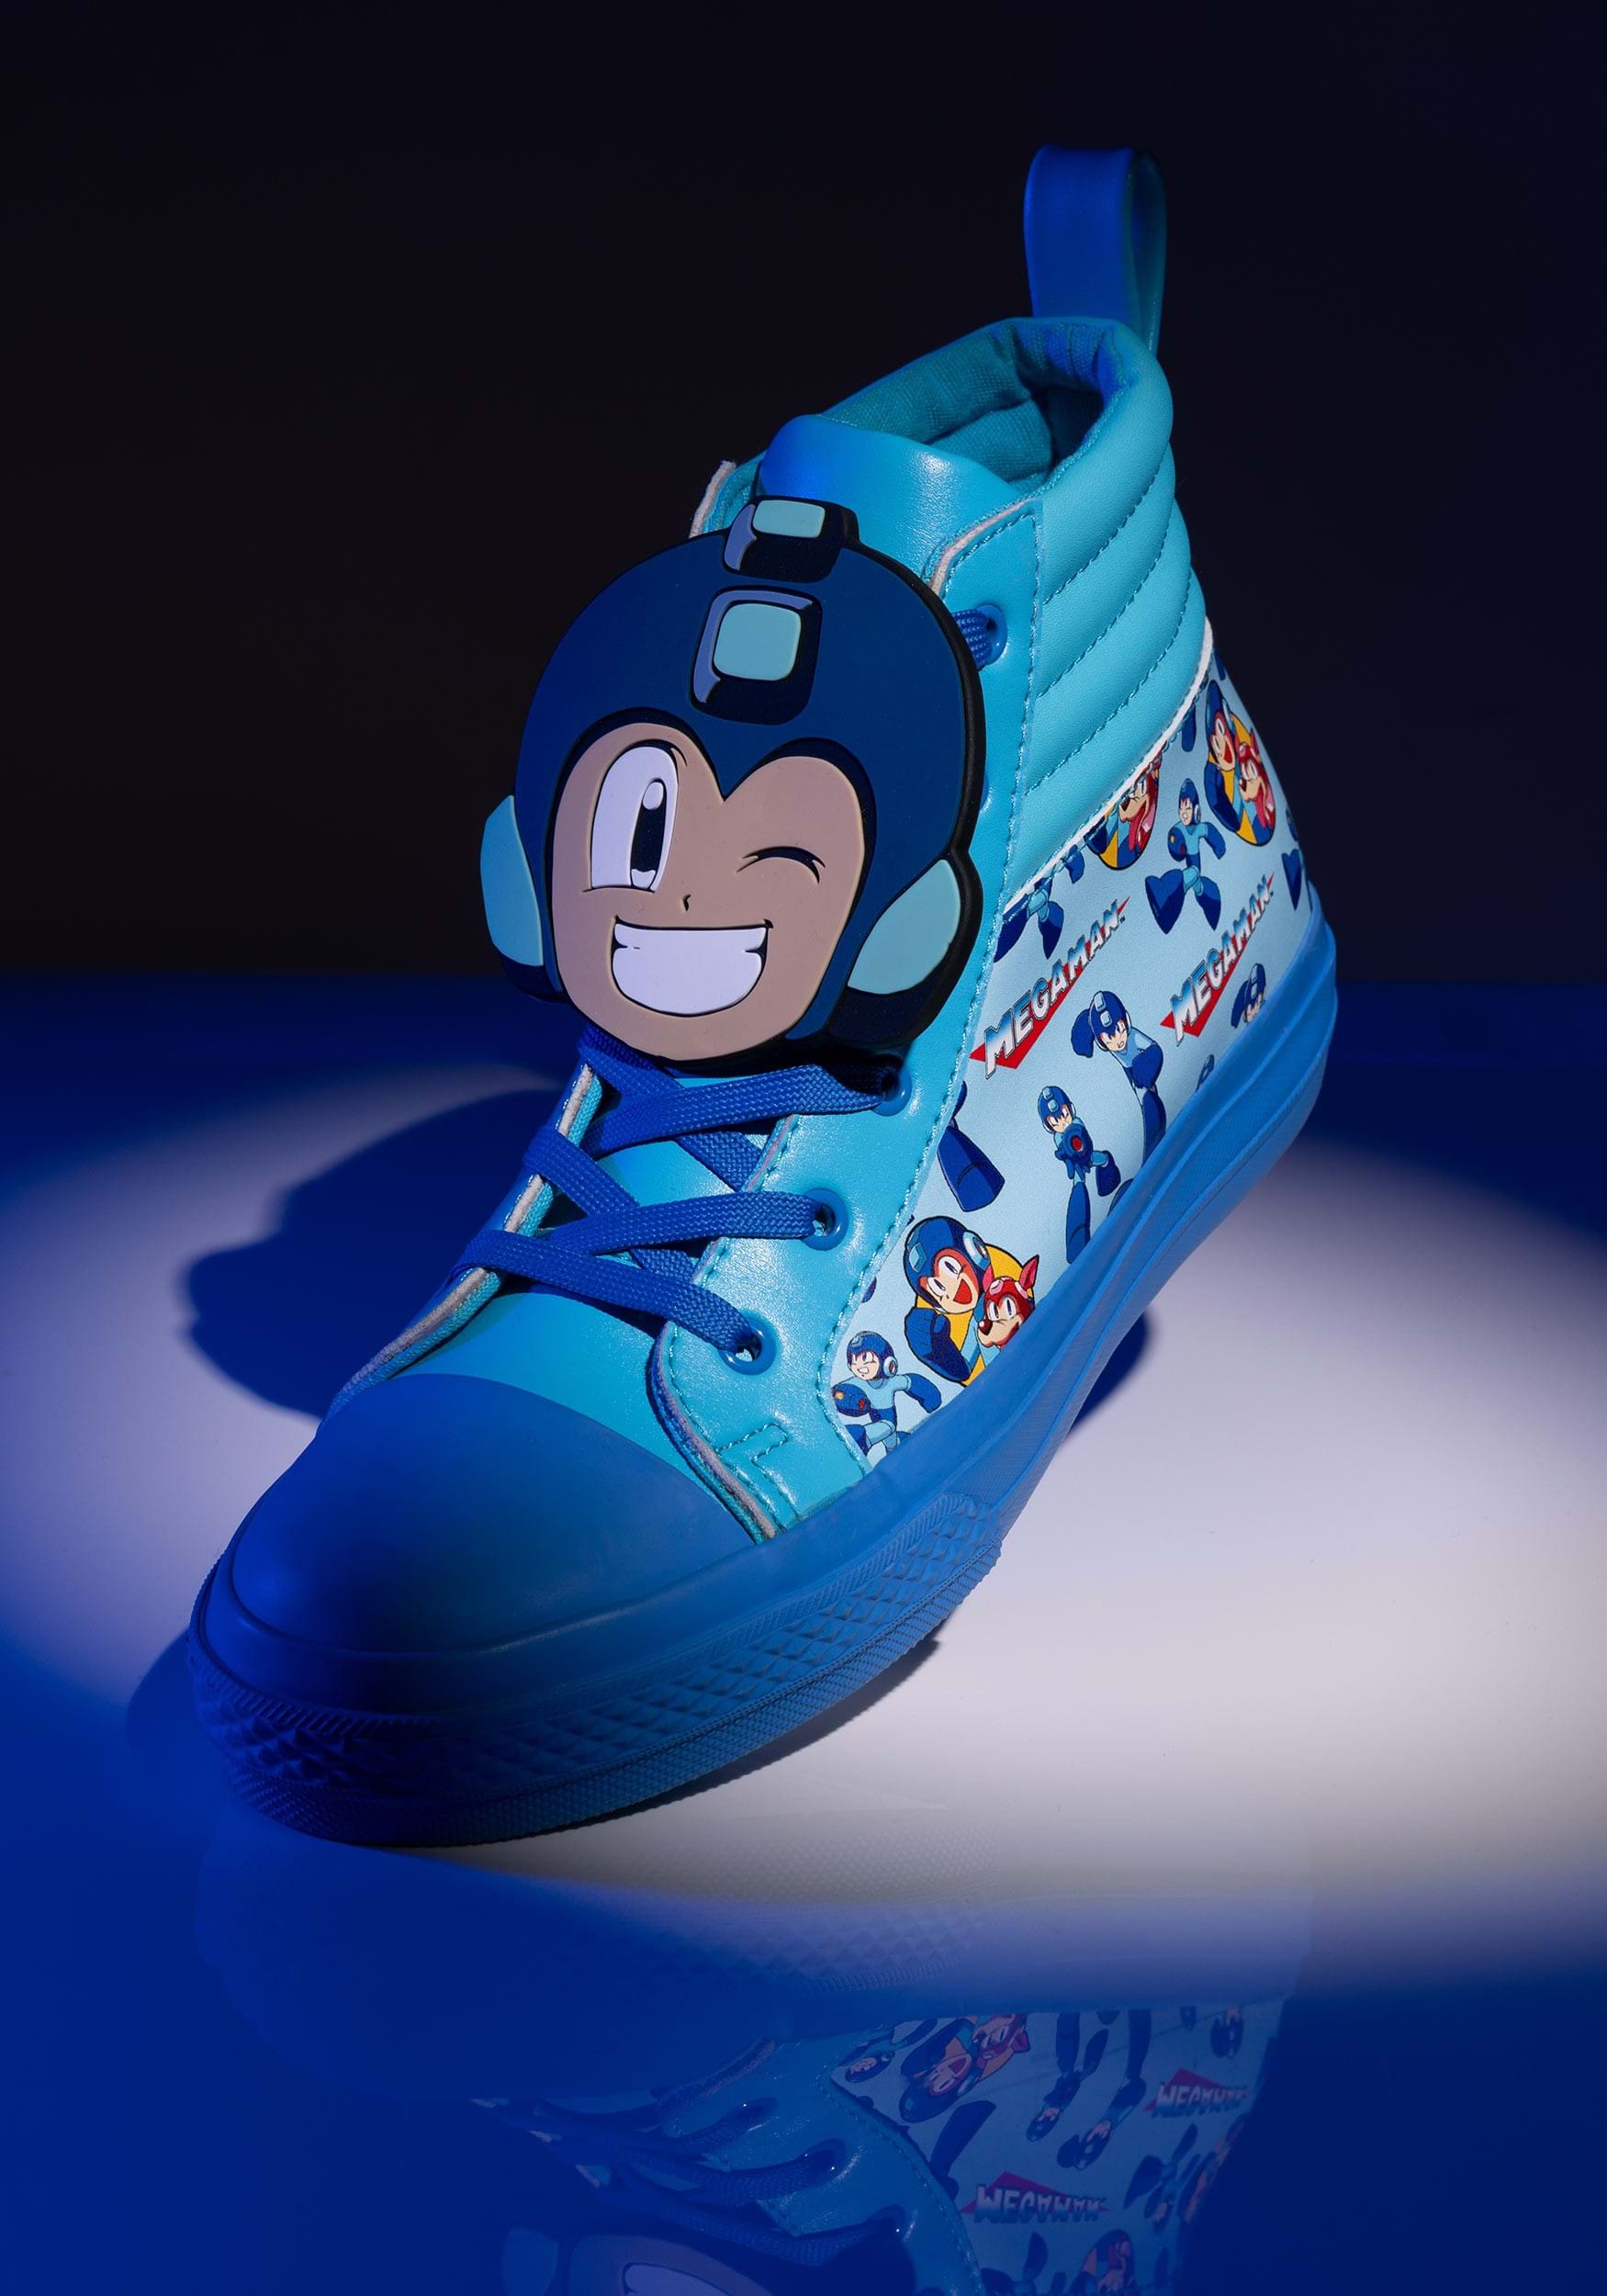 Adult Mega Man High Top Sneaker , Mega Man Apparel